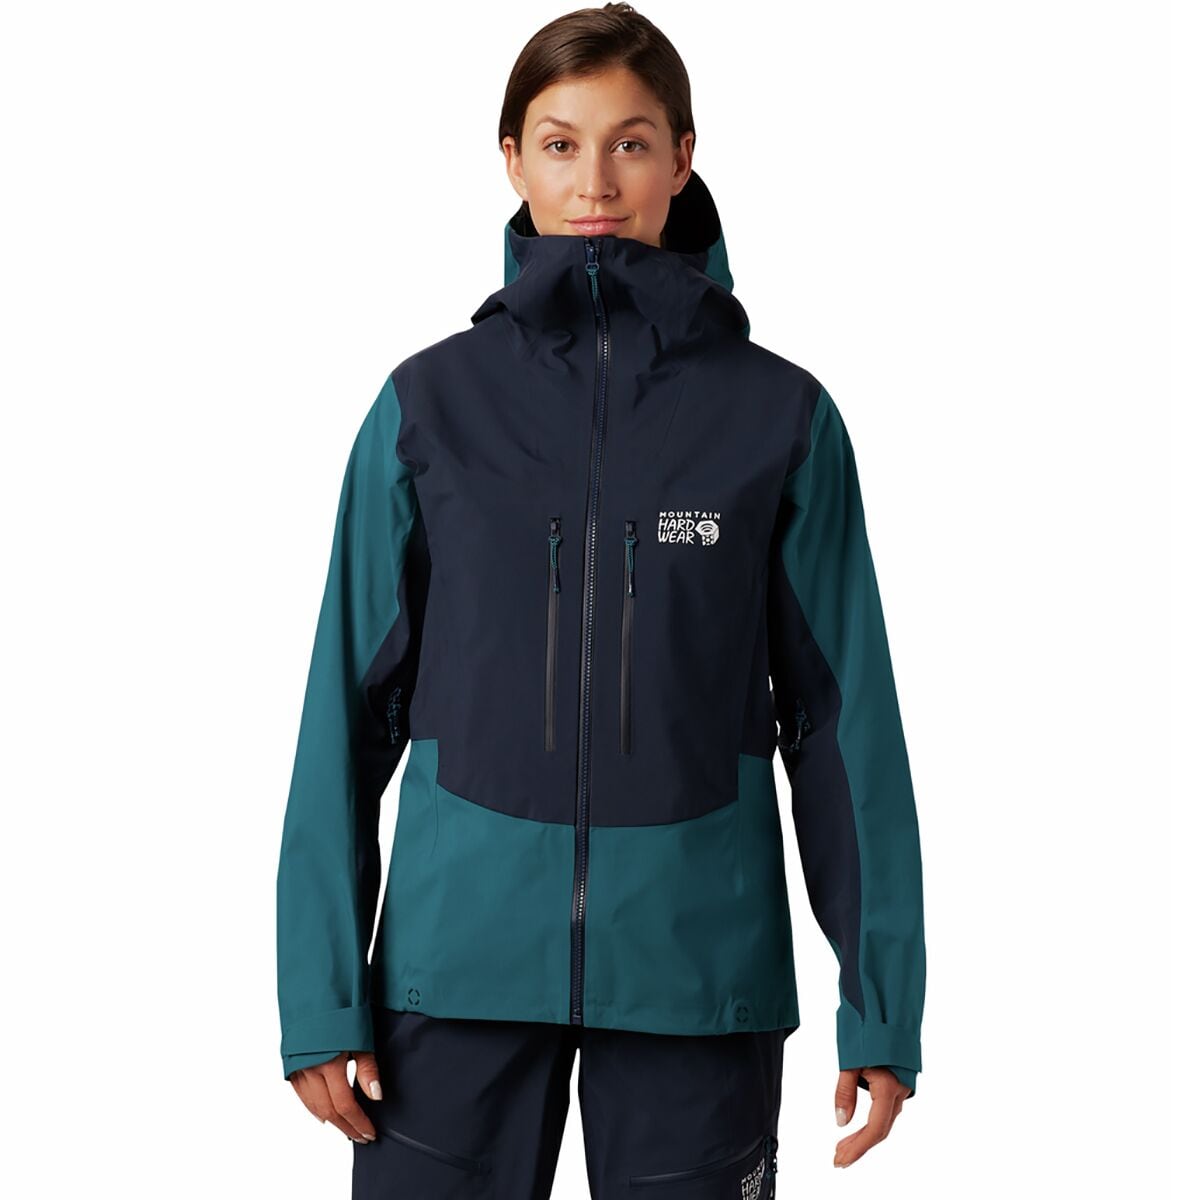 Mountain Hardwear Exposure 2 GORE-TEX Pro Jacket - Women's